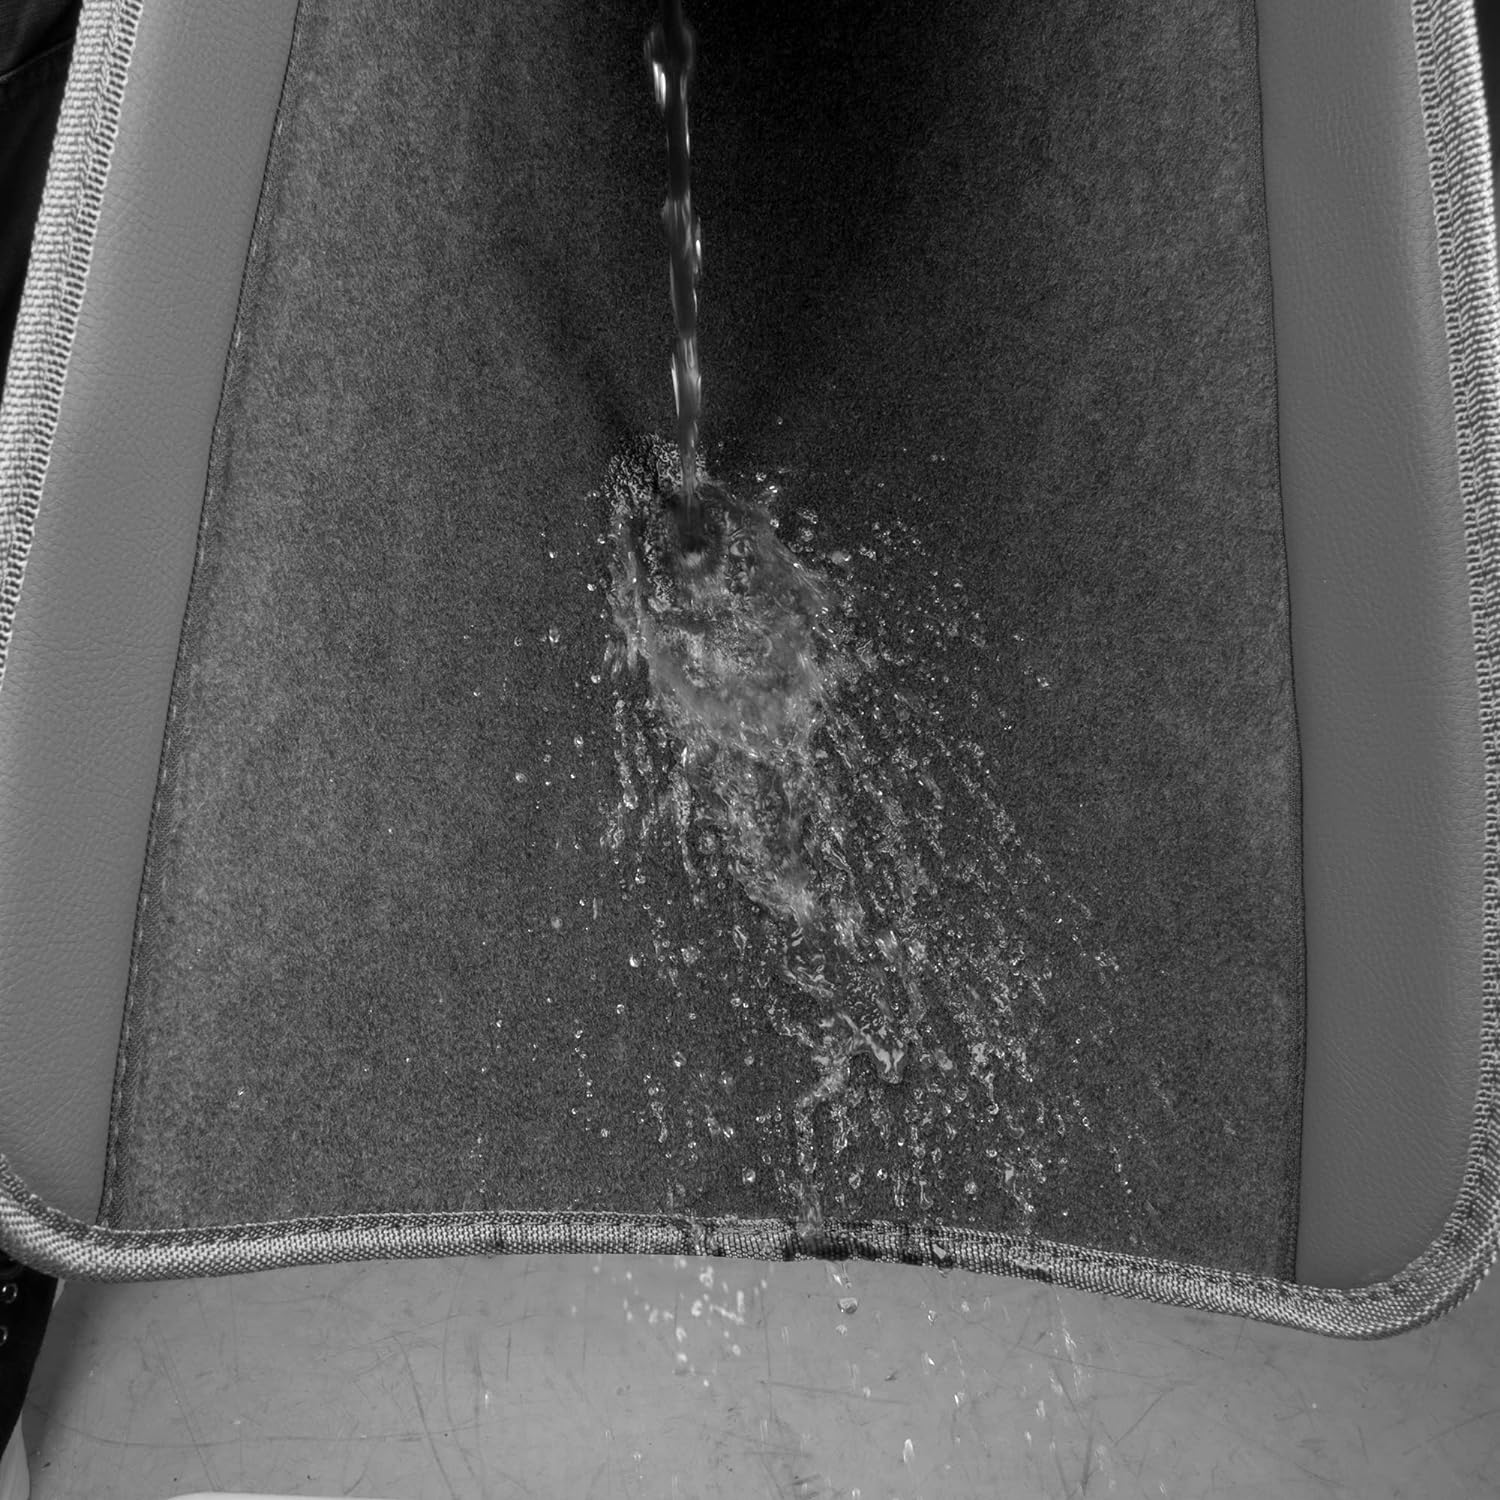 CAR PASS Waterproof Universal Fit Car Floor Mats, Faux Leather Car Carpet Mats, Black Car Mats with Anti-Slip Nibbs Backing & Driver Heel Pad Fit for SUV,Vans,sedans, Trucks,Set of 4pcs(All Black)